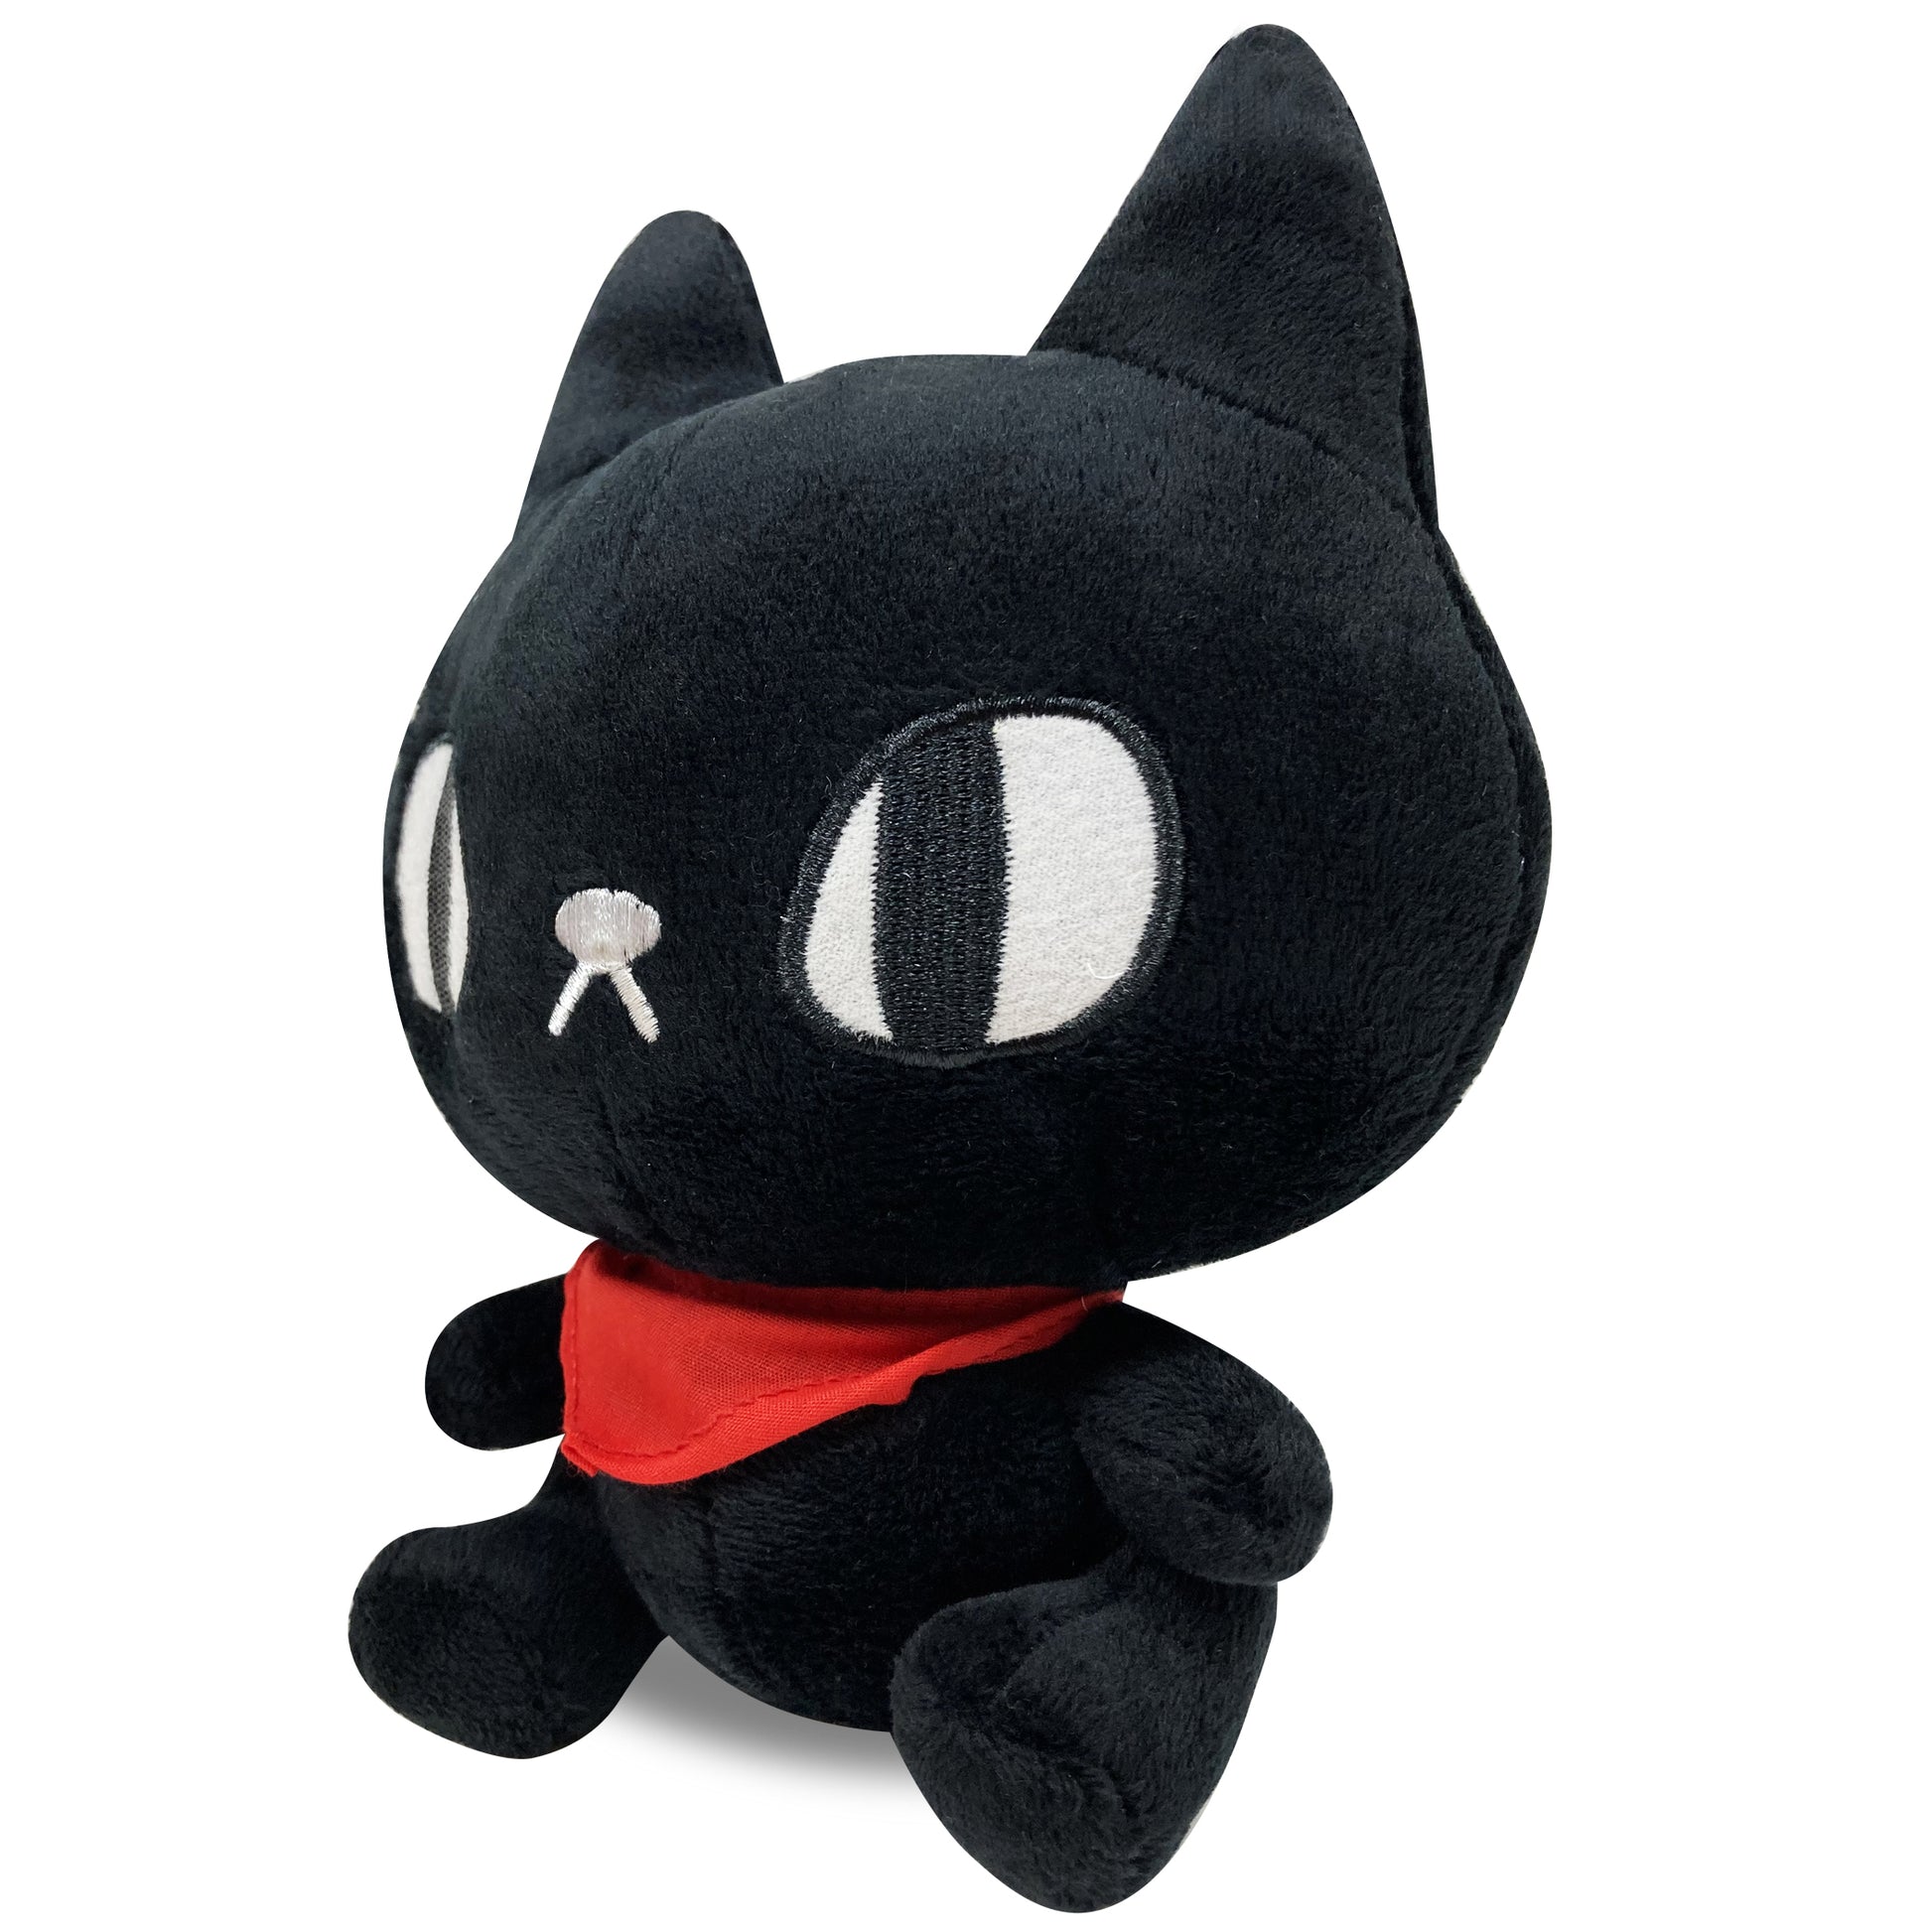 1_Black_Cat_Stuffed_Toy_Product_image.jpg